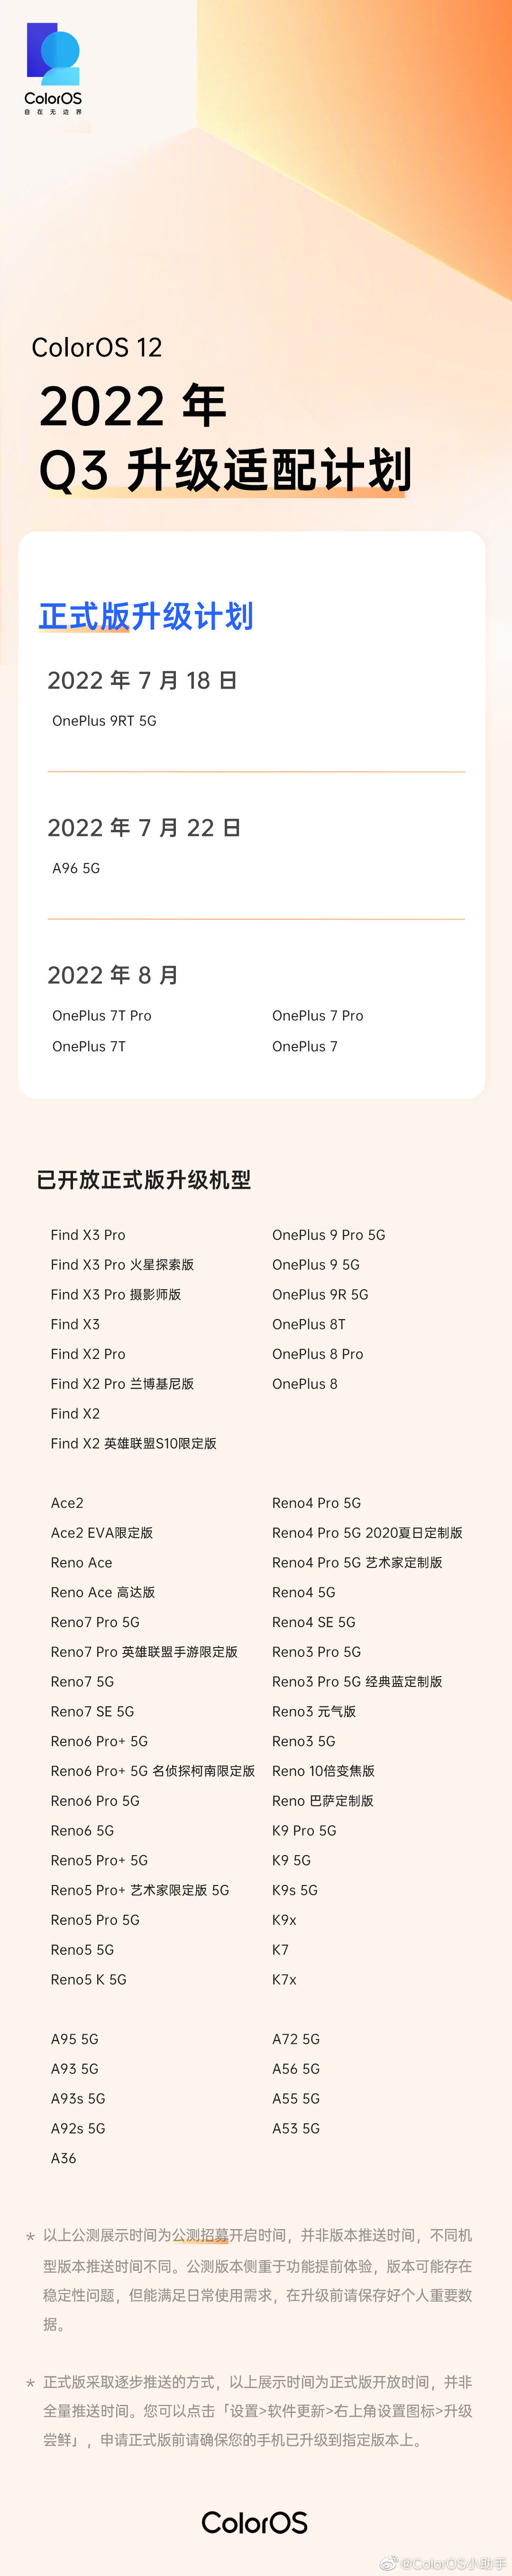 OPPO ColorOS 12 Q3升级适配计划公布